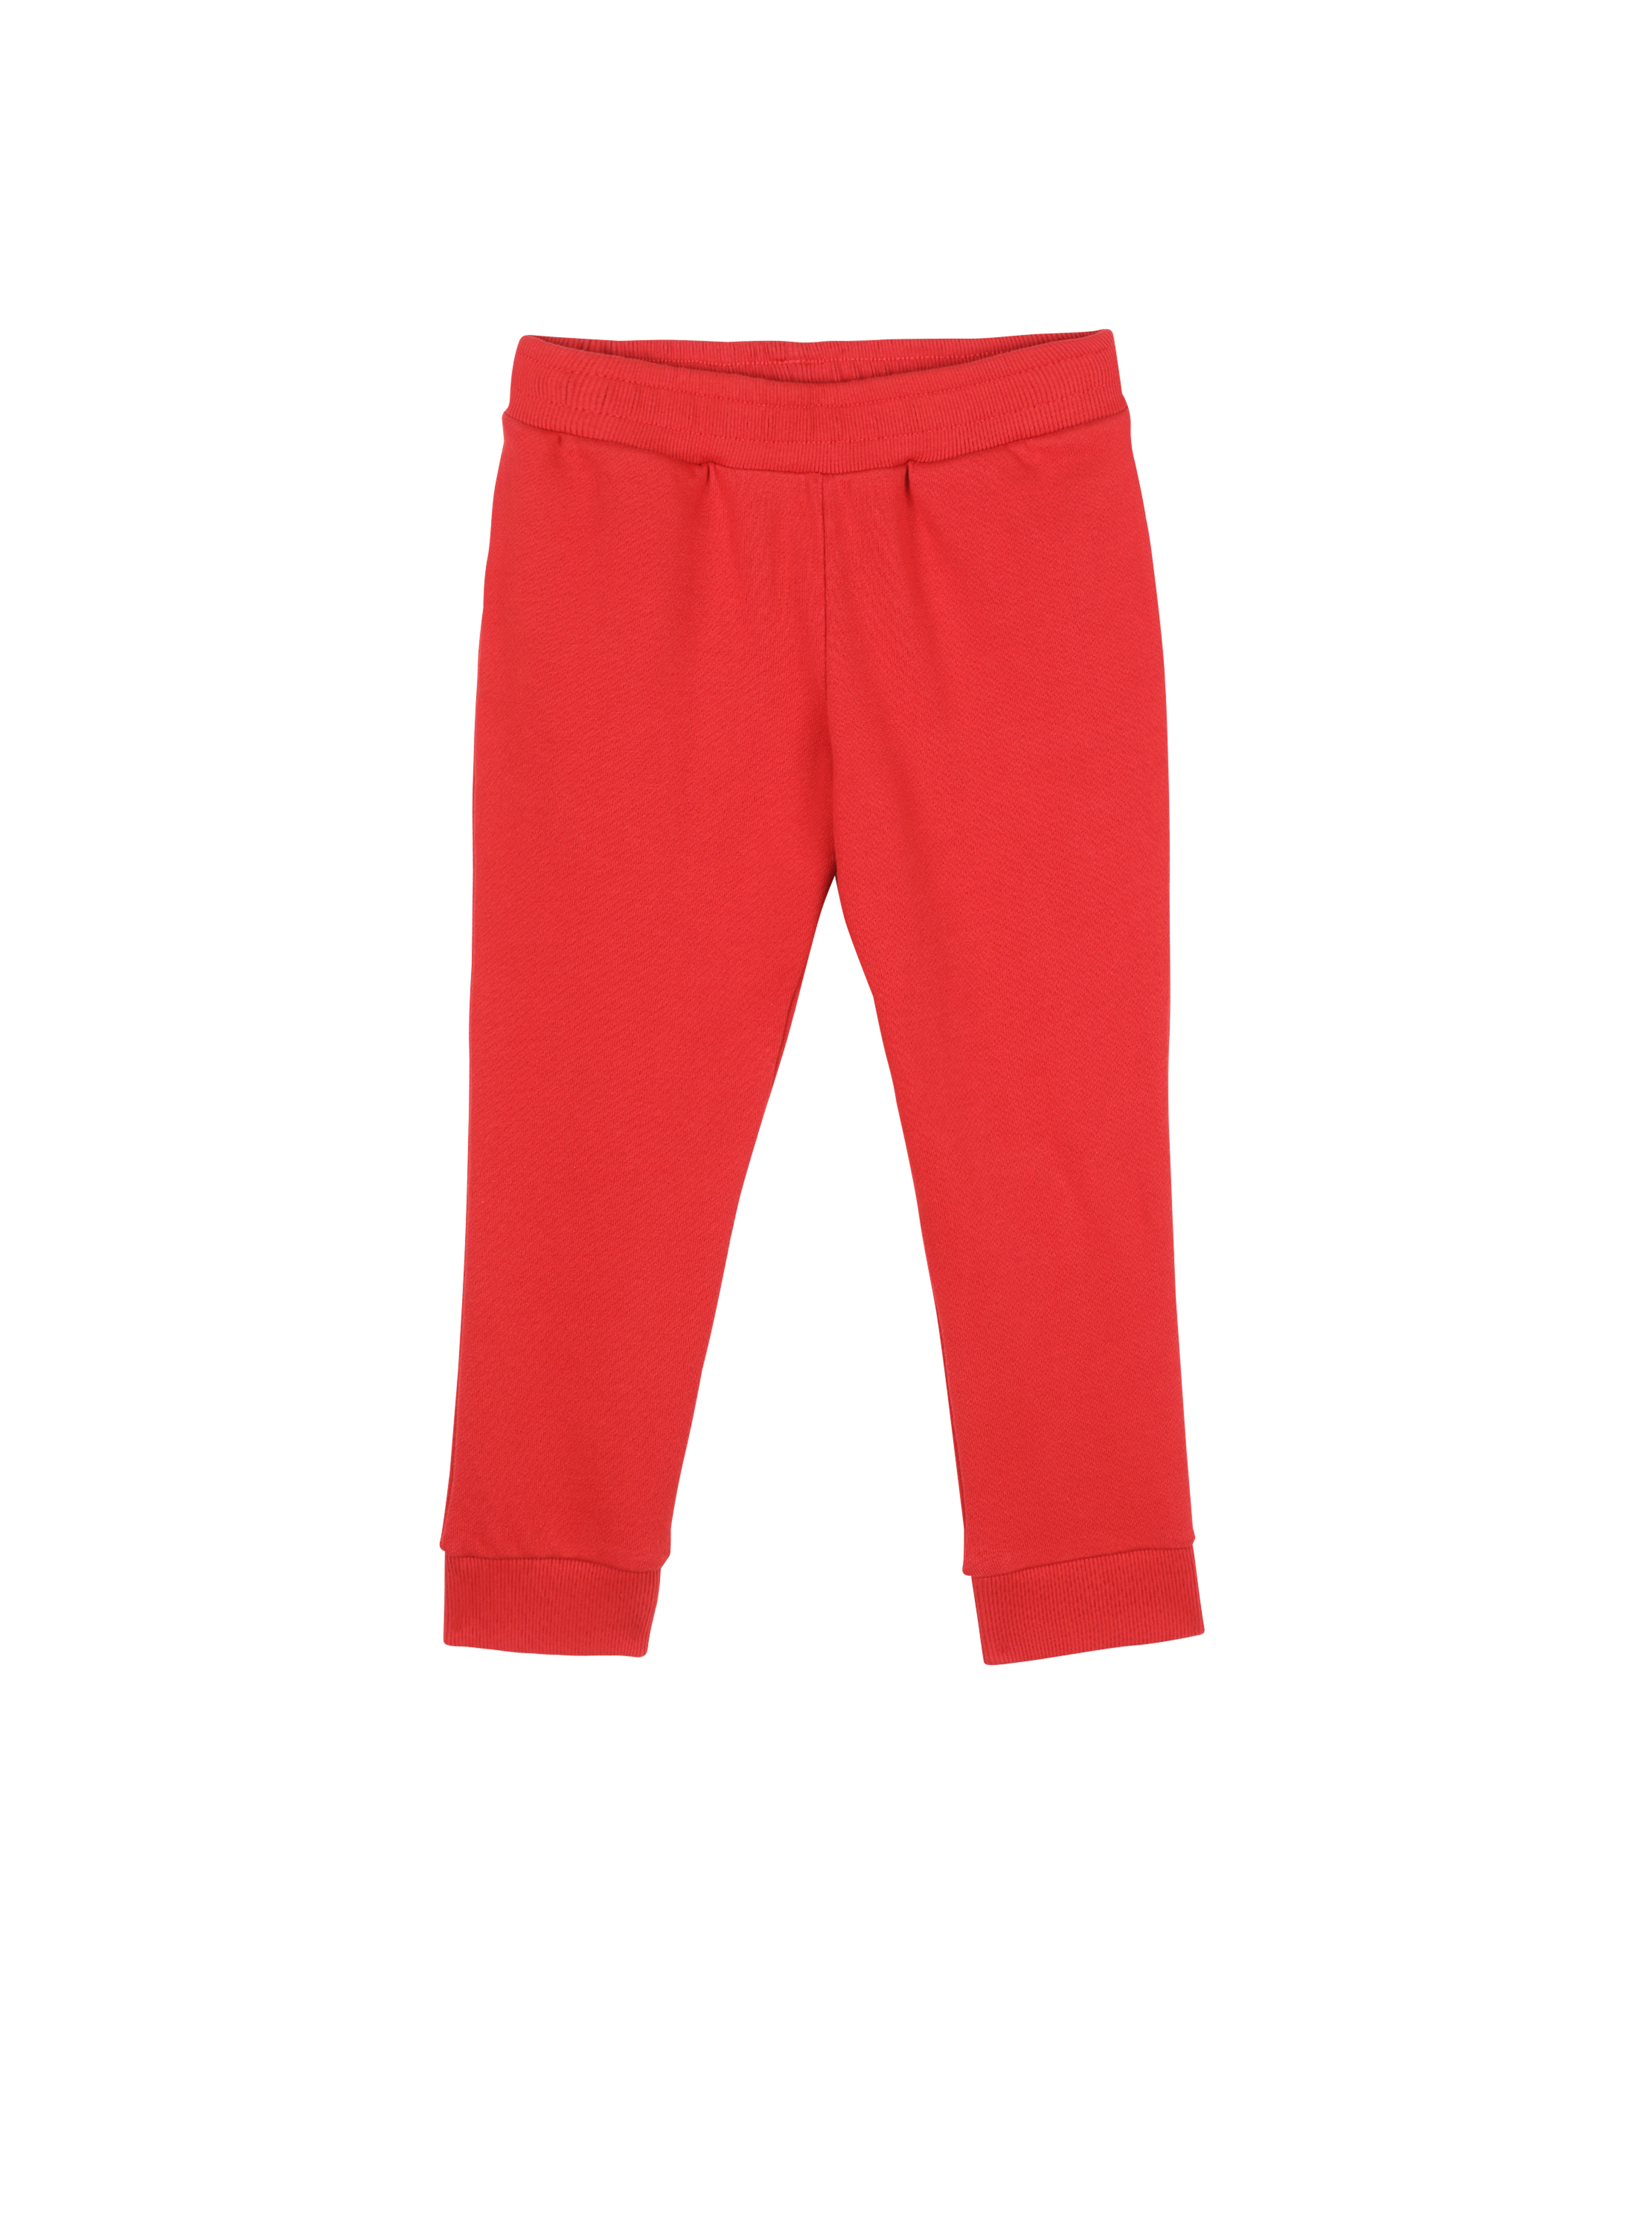 Cotton jogging bottoms with Balmain logo, red